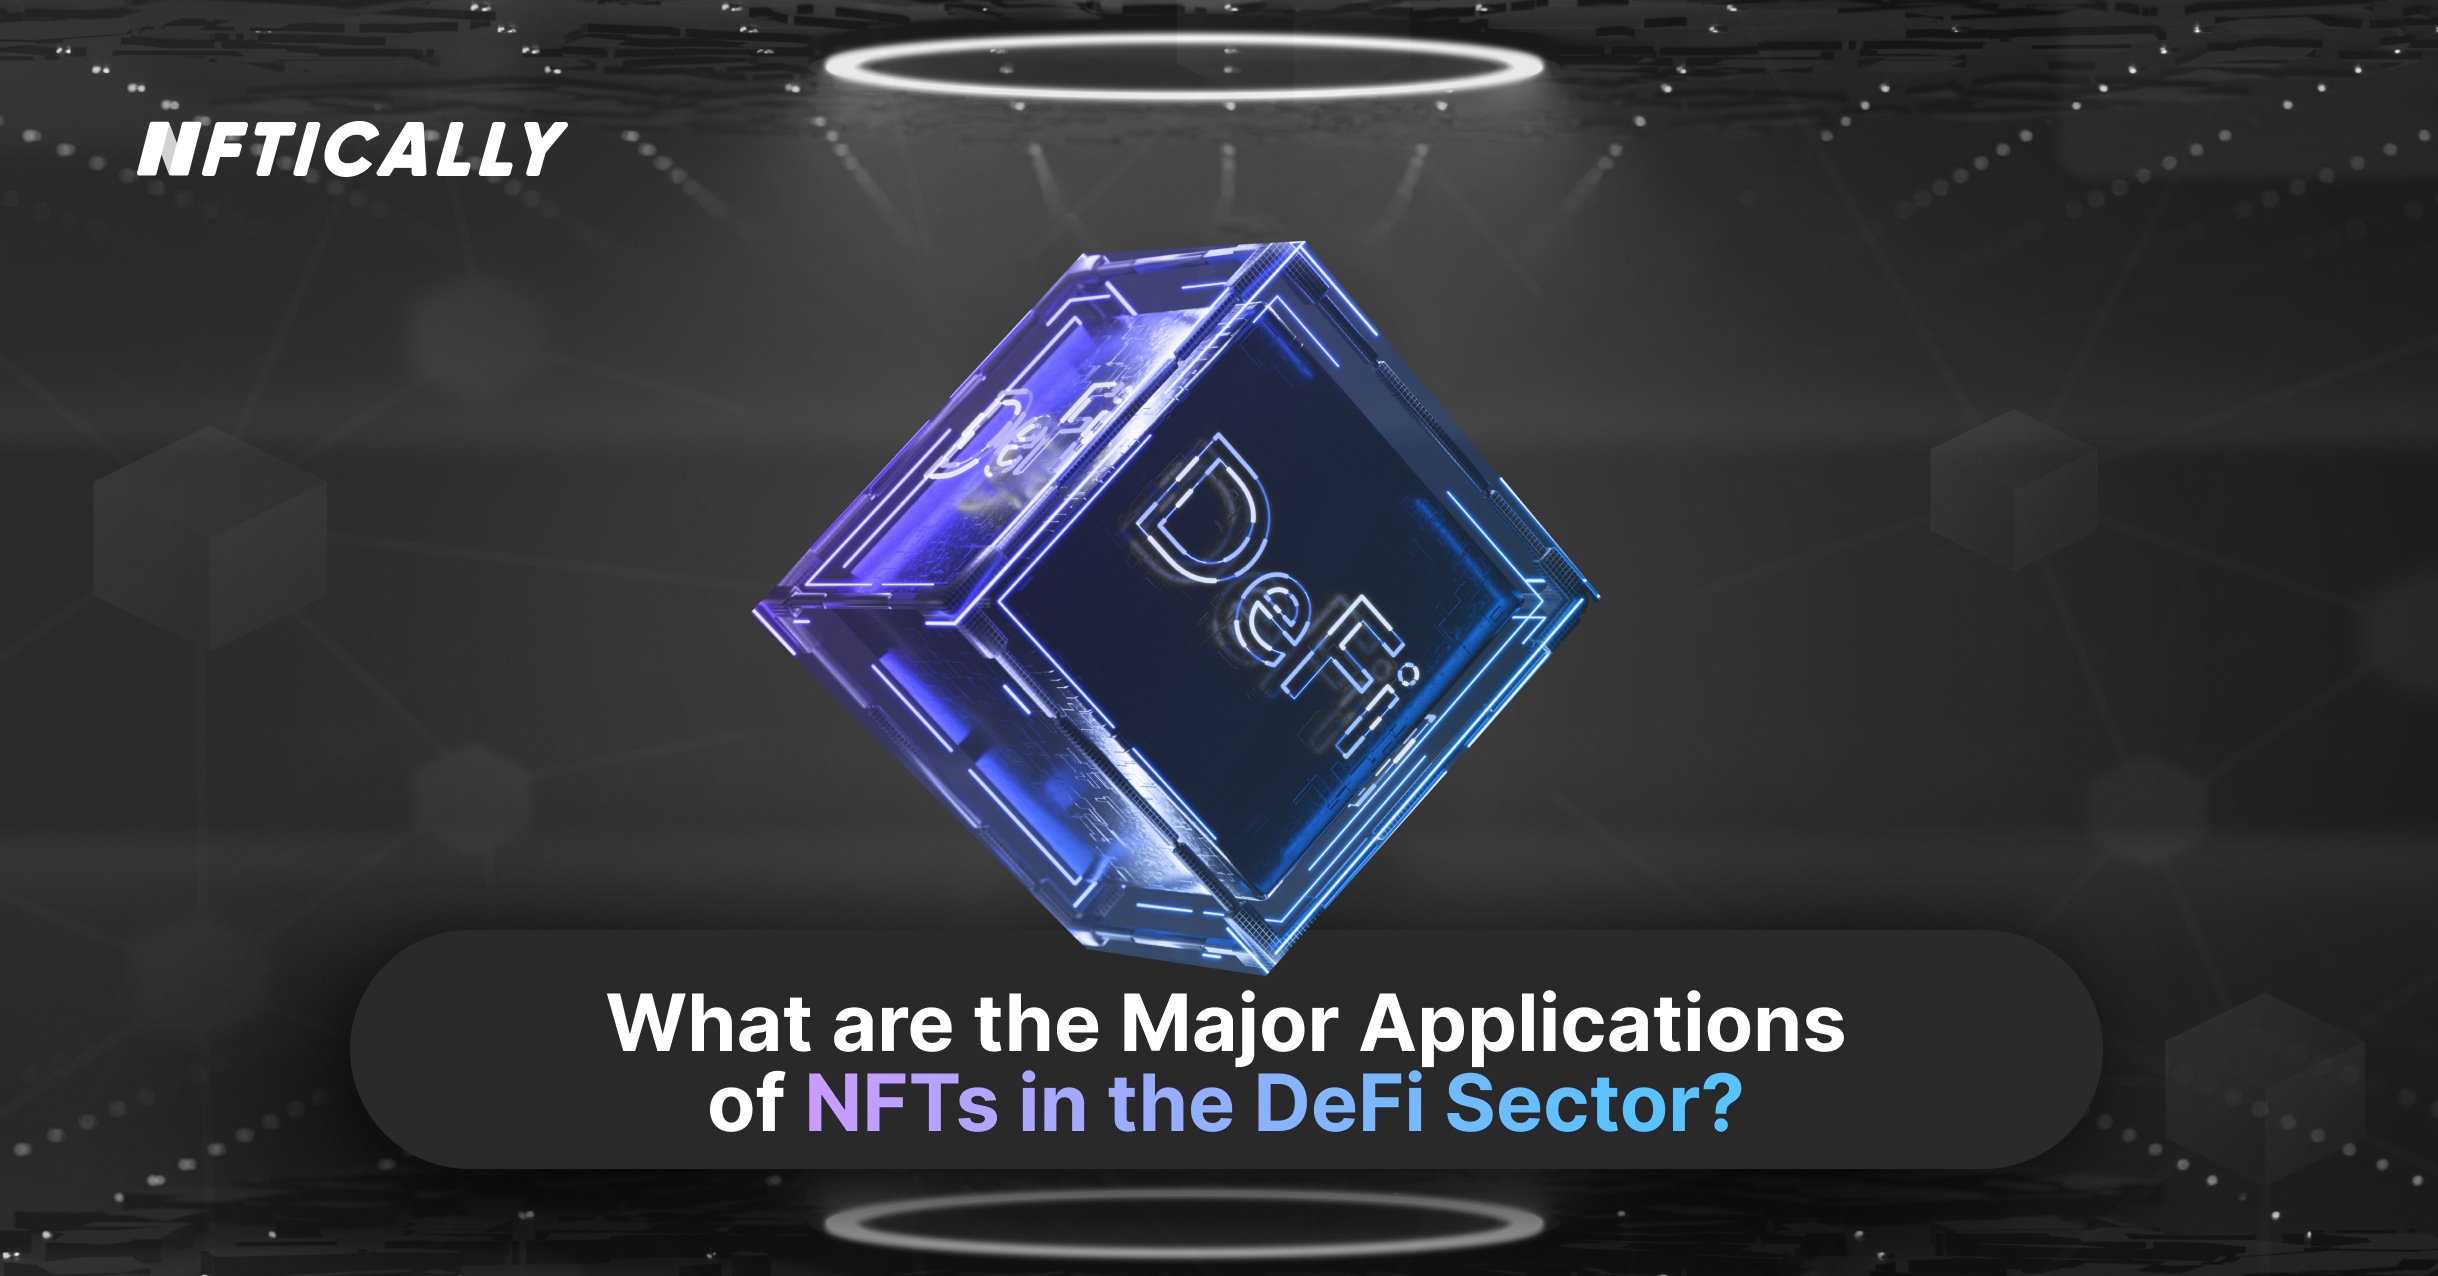 NFTs in DeFi Applications